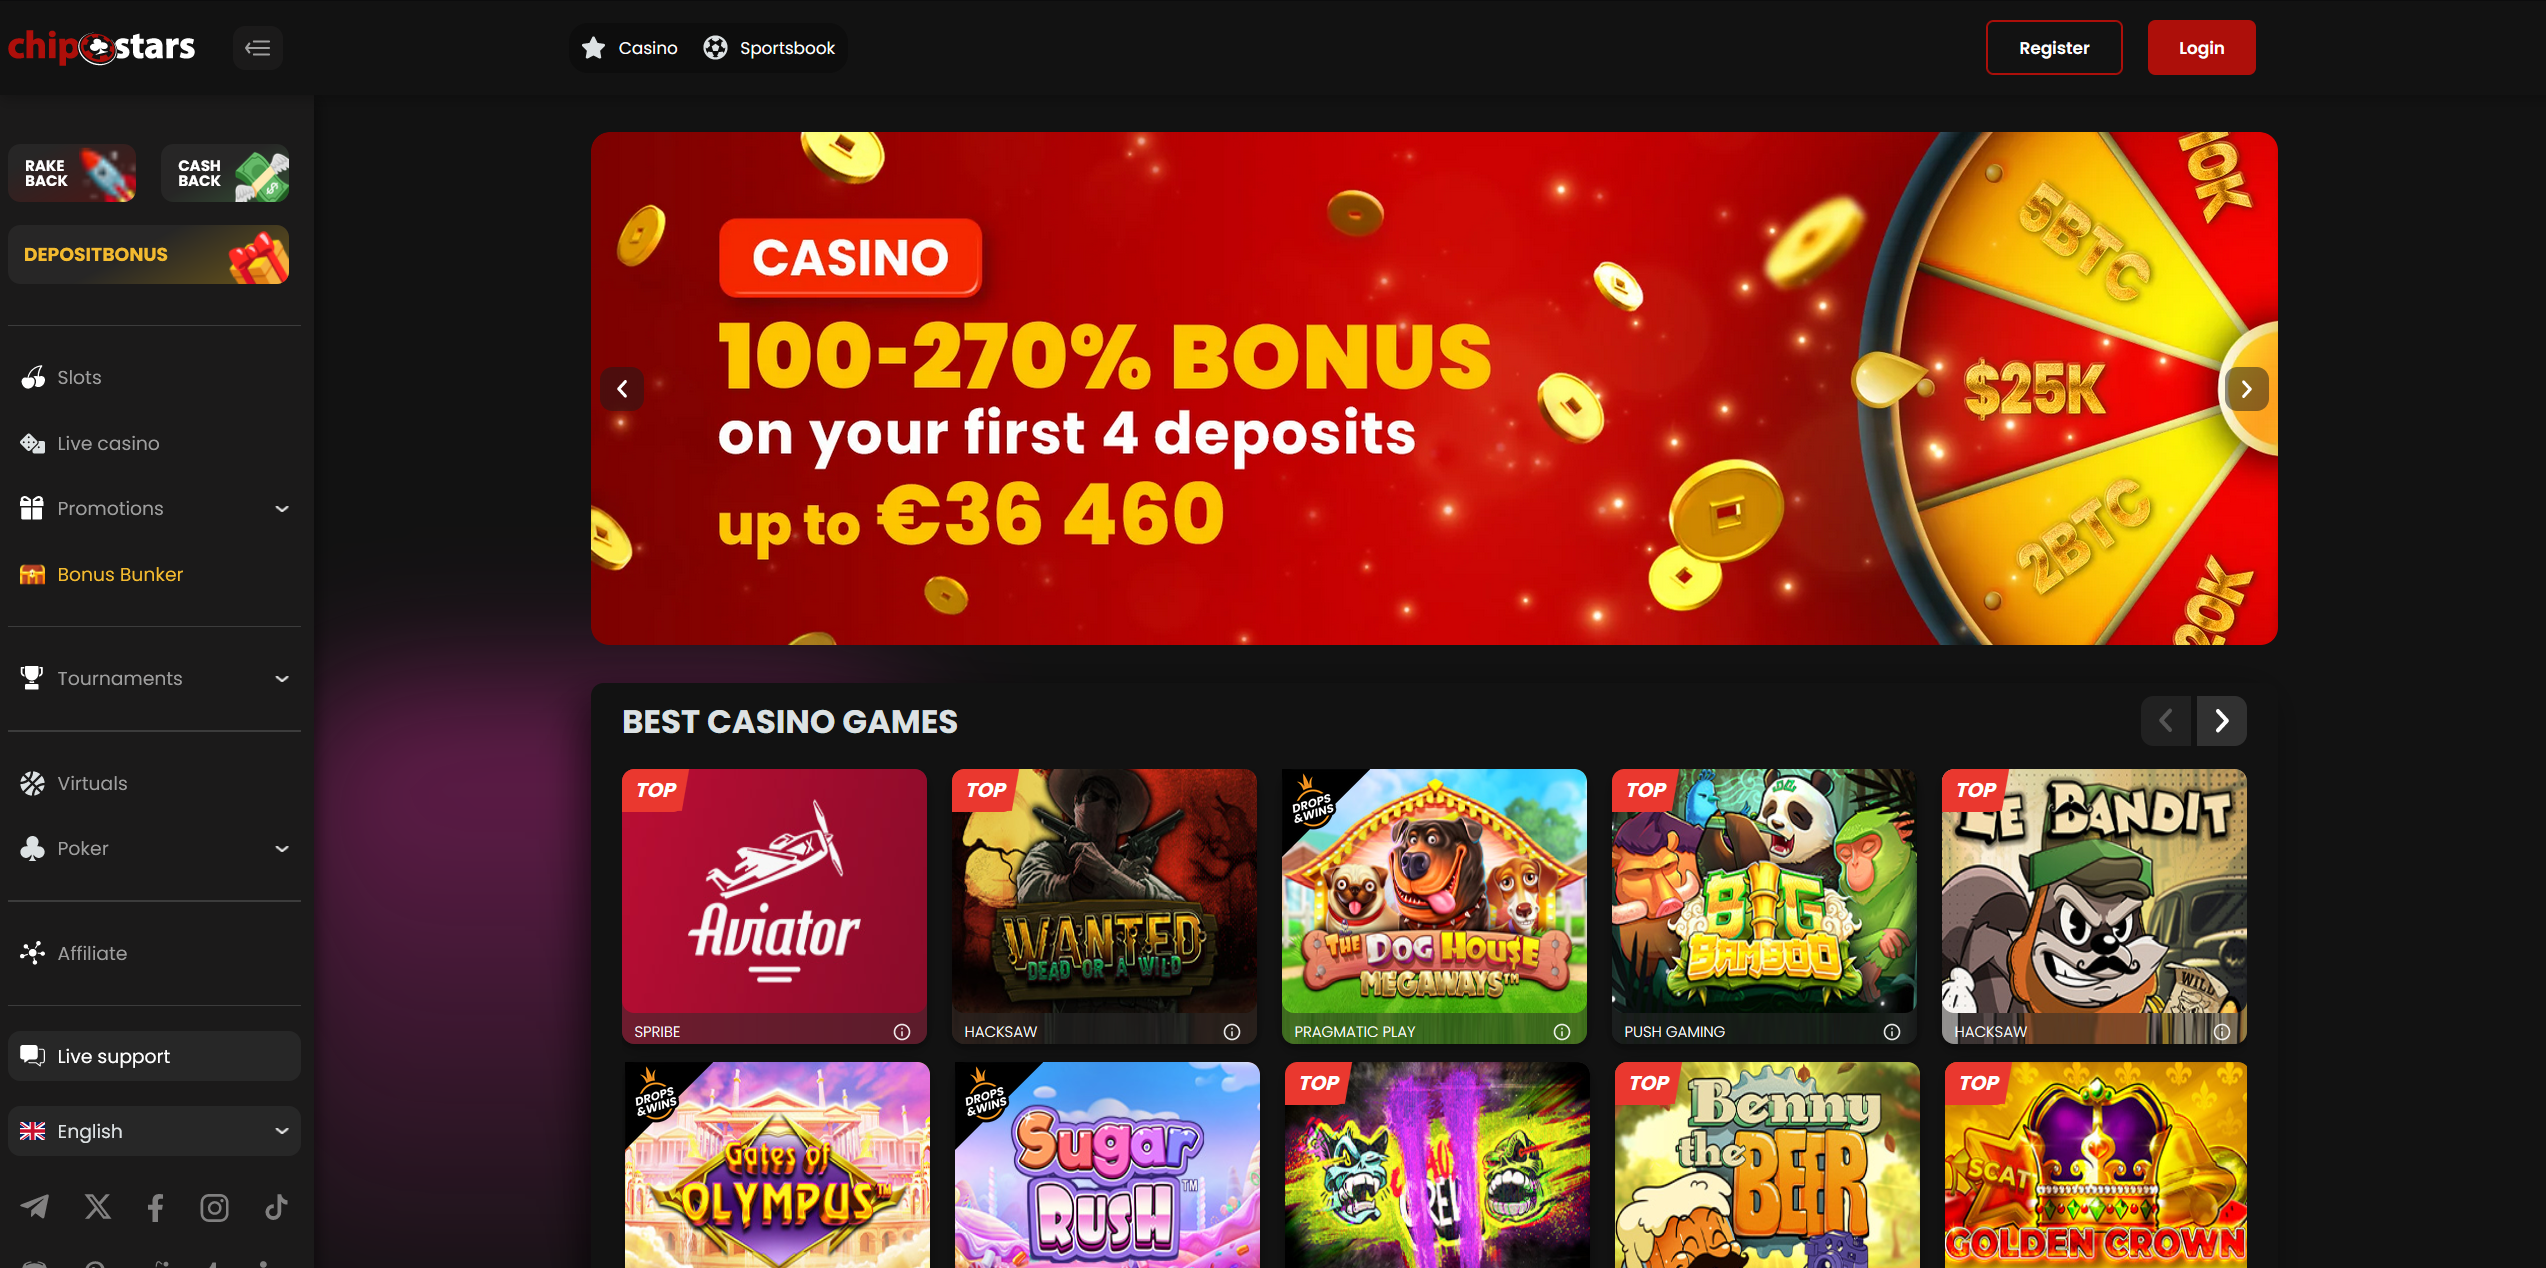 Chipstars Casino Design